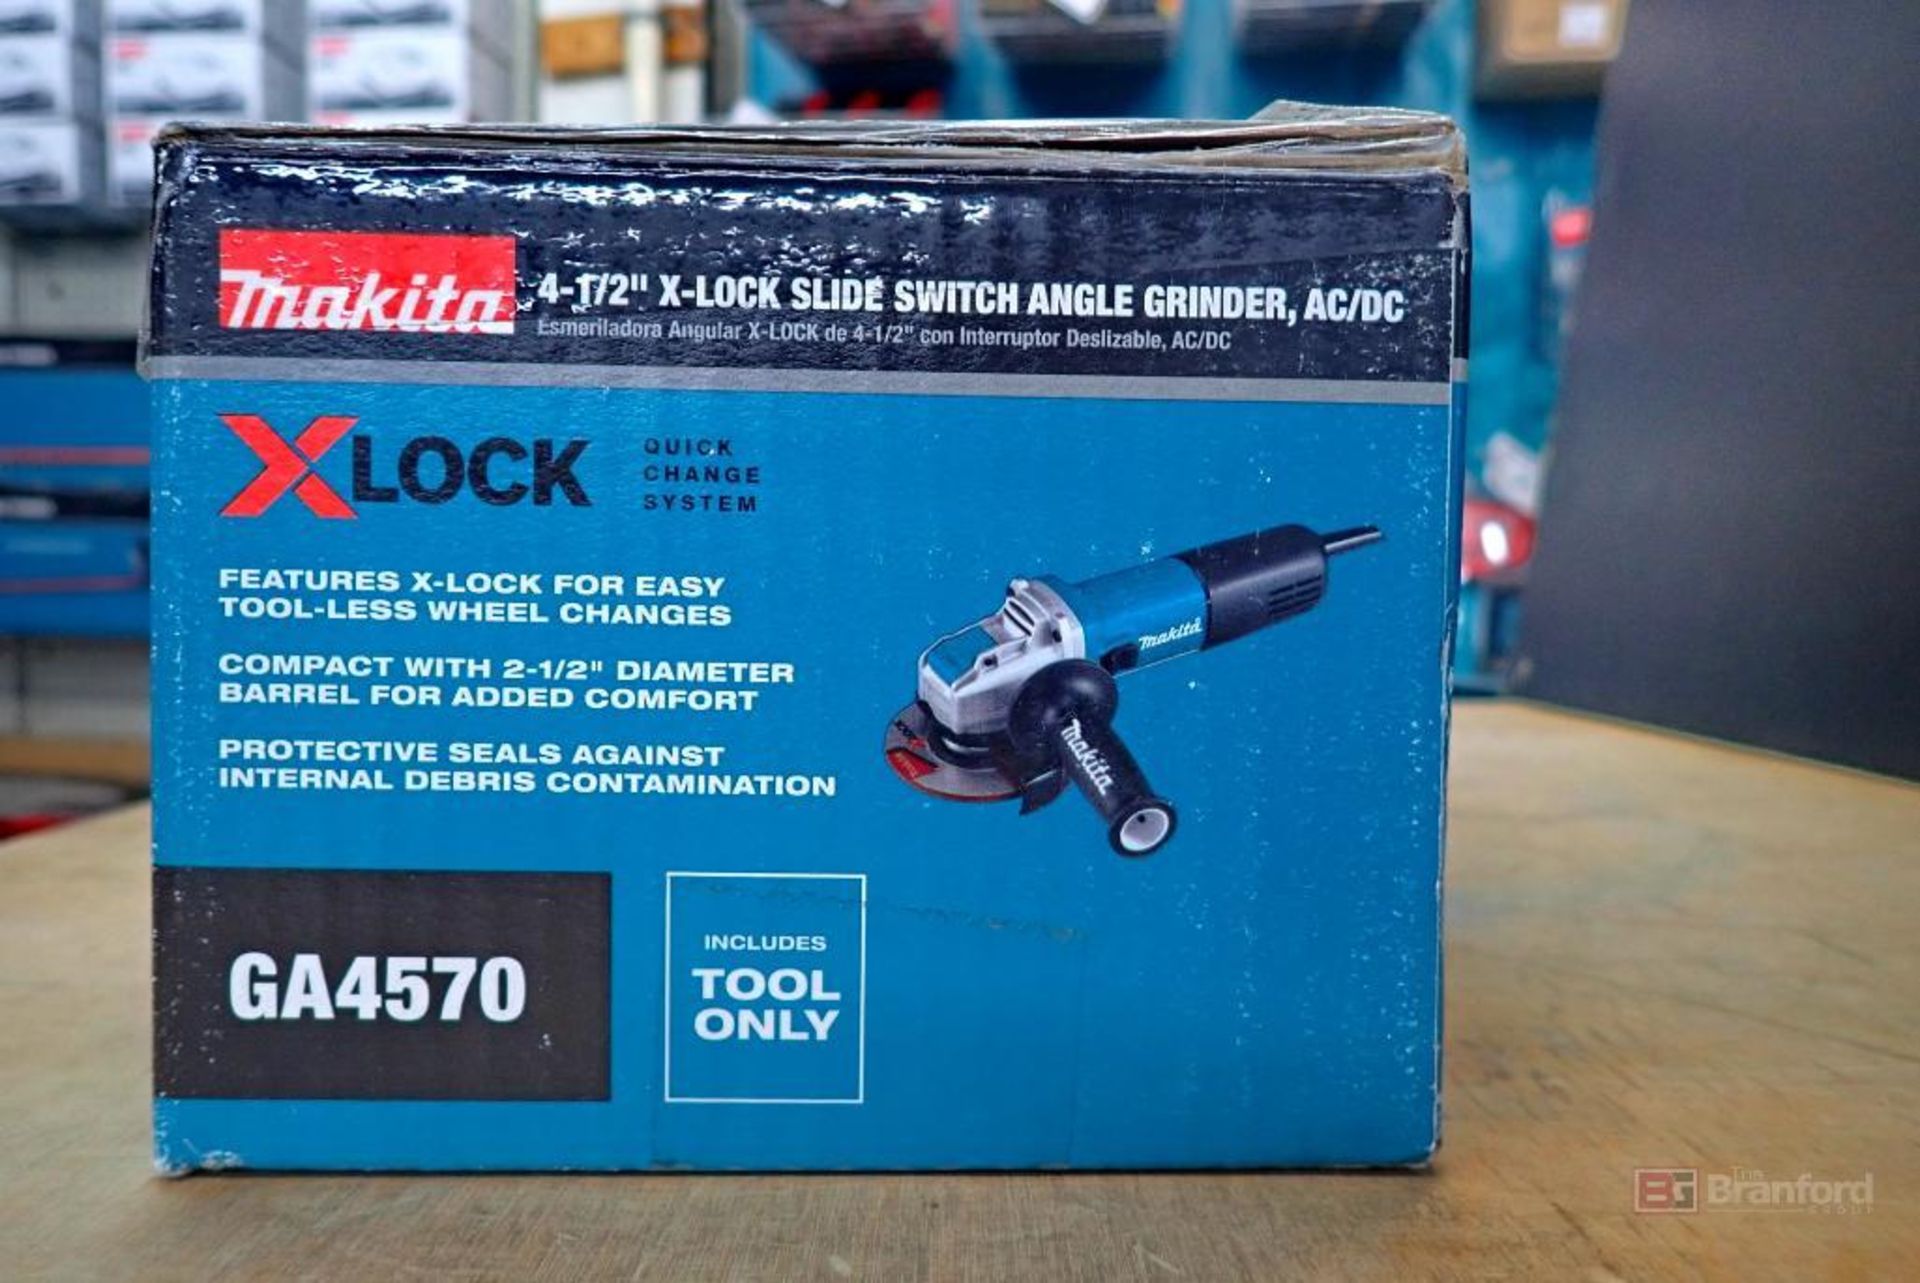 Makita GA4570 4-1/2" X-Lock Slide Switch Angle Grinder - Image 3 of 8